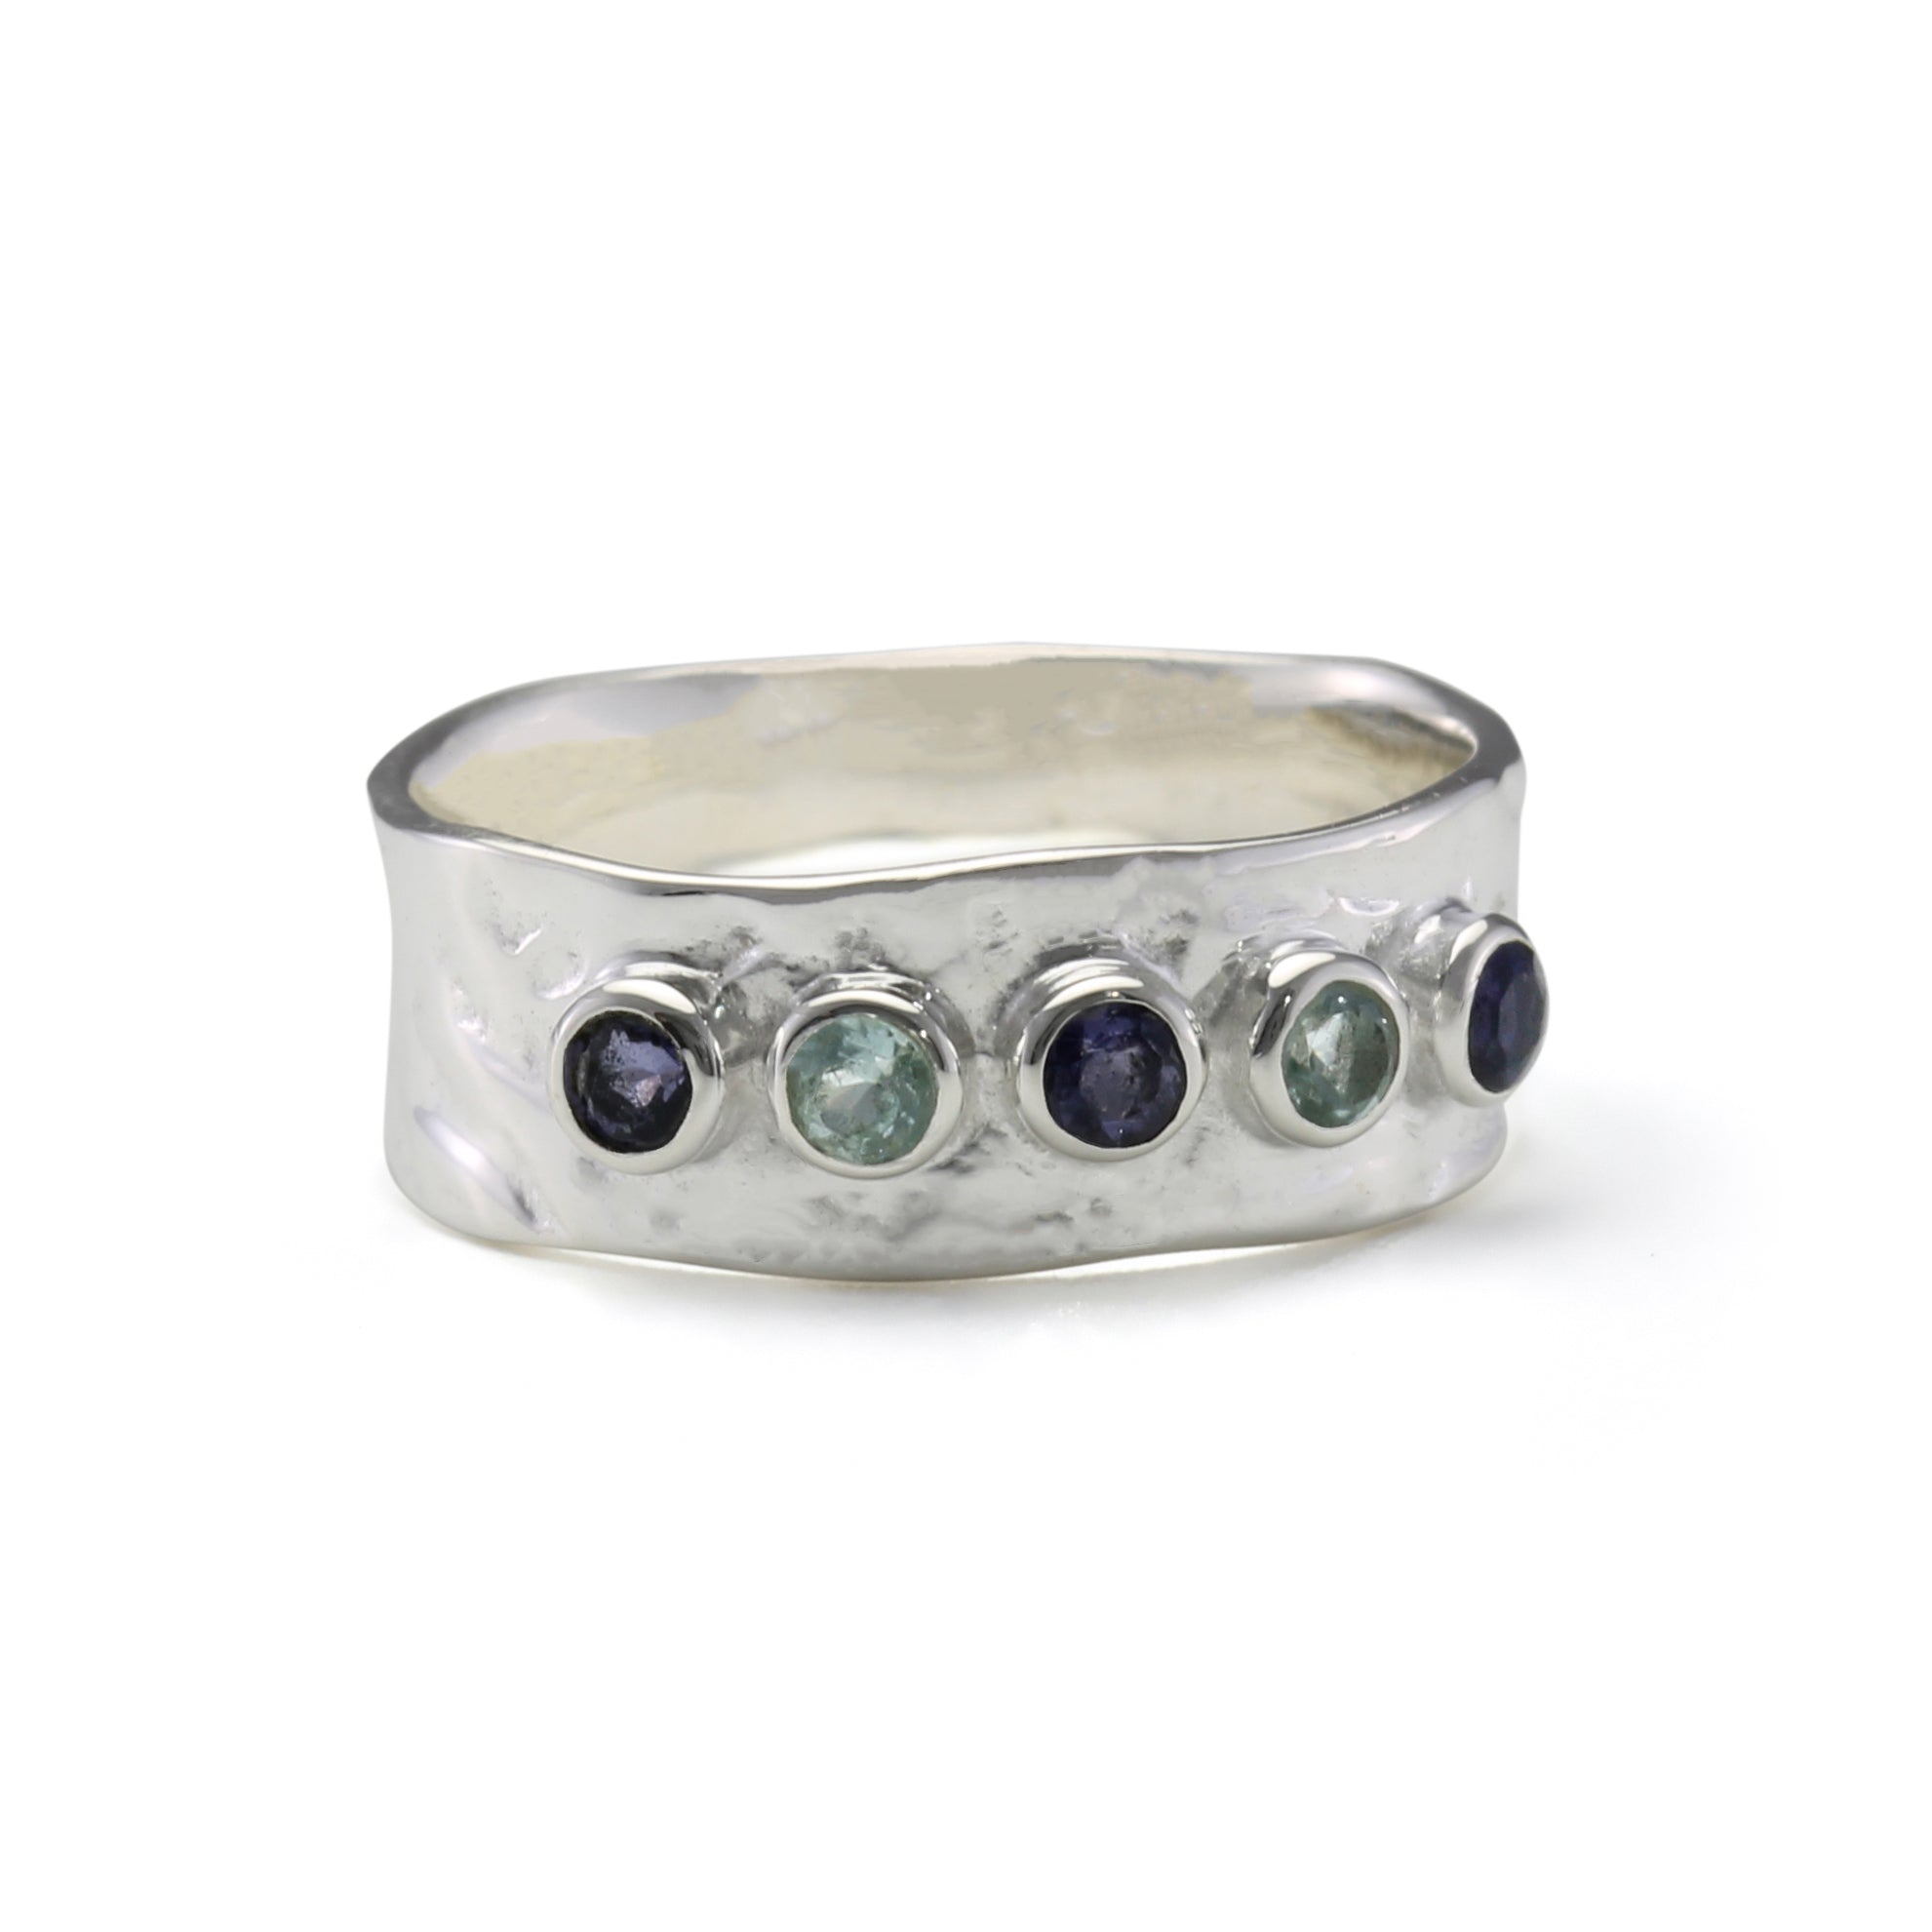 Topaz & Iolite Ring - The Nancy Smillie Shop - Art, Jewellery & Designer Gifts Glasgow